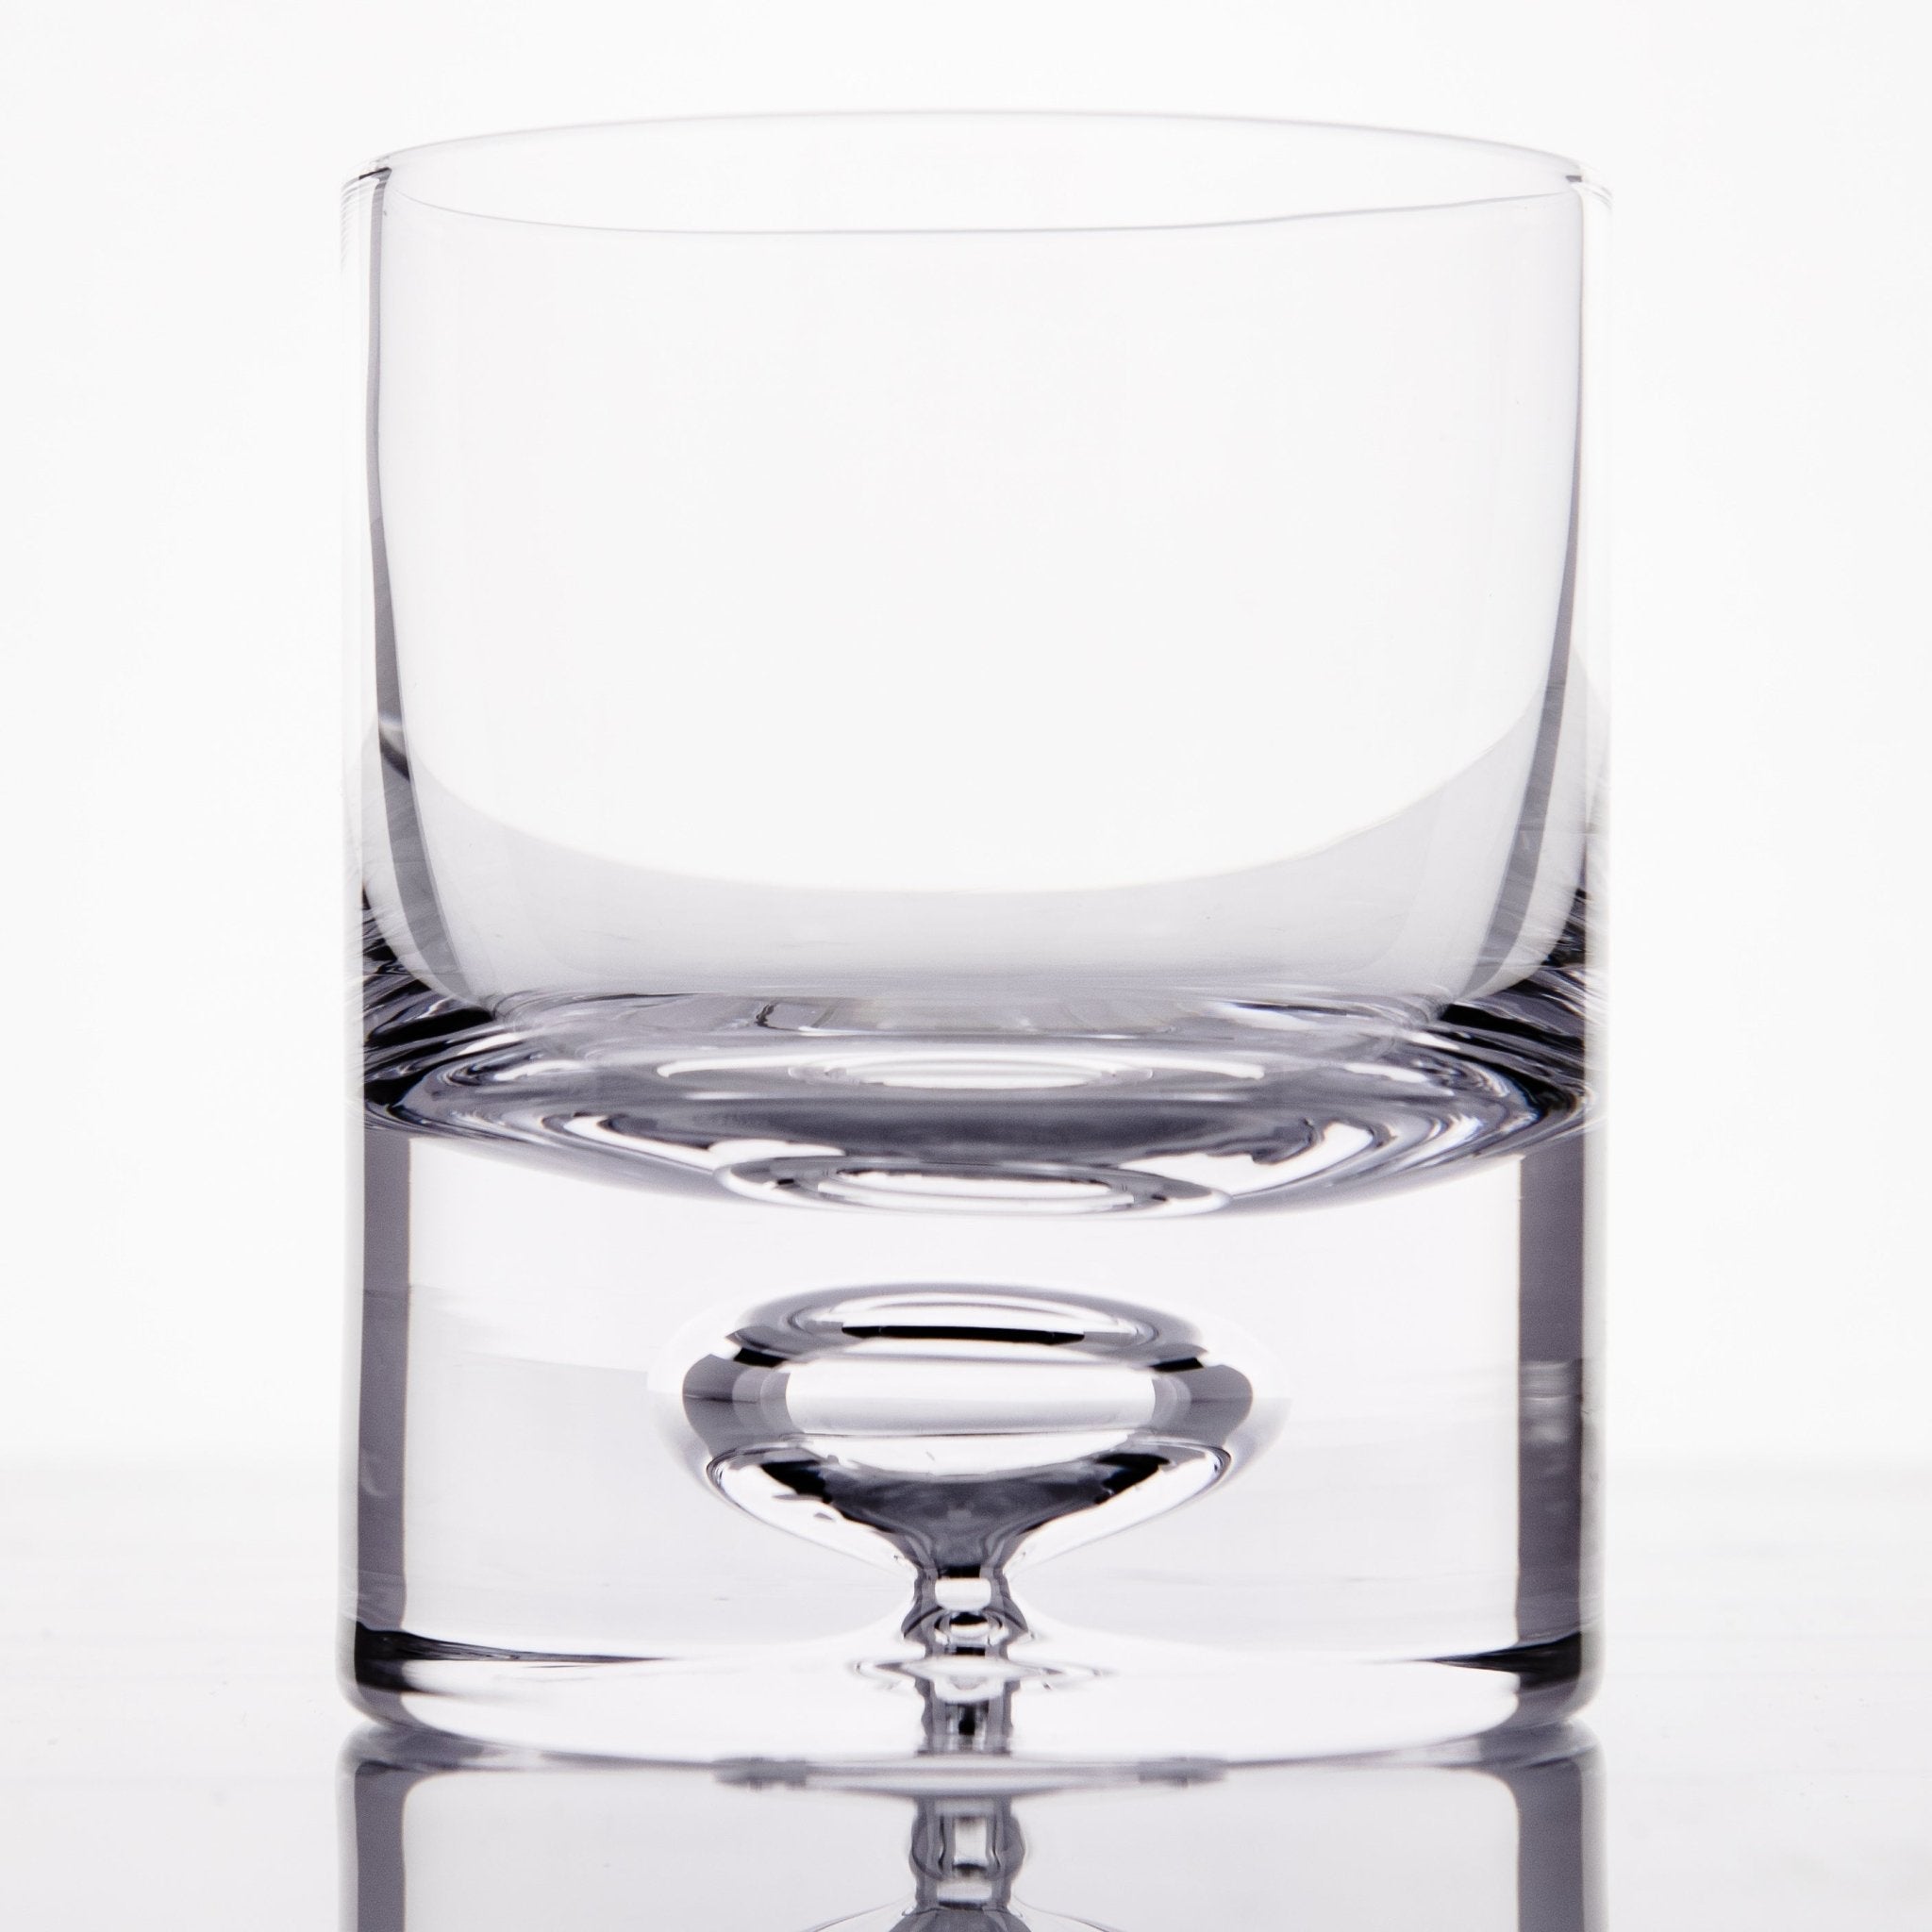 Whiskey Glass Tumbler by LemonSoda